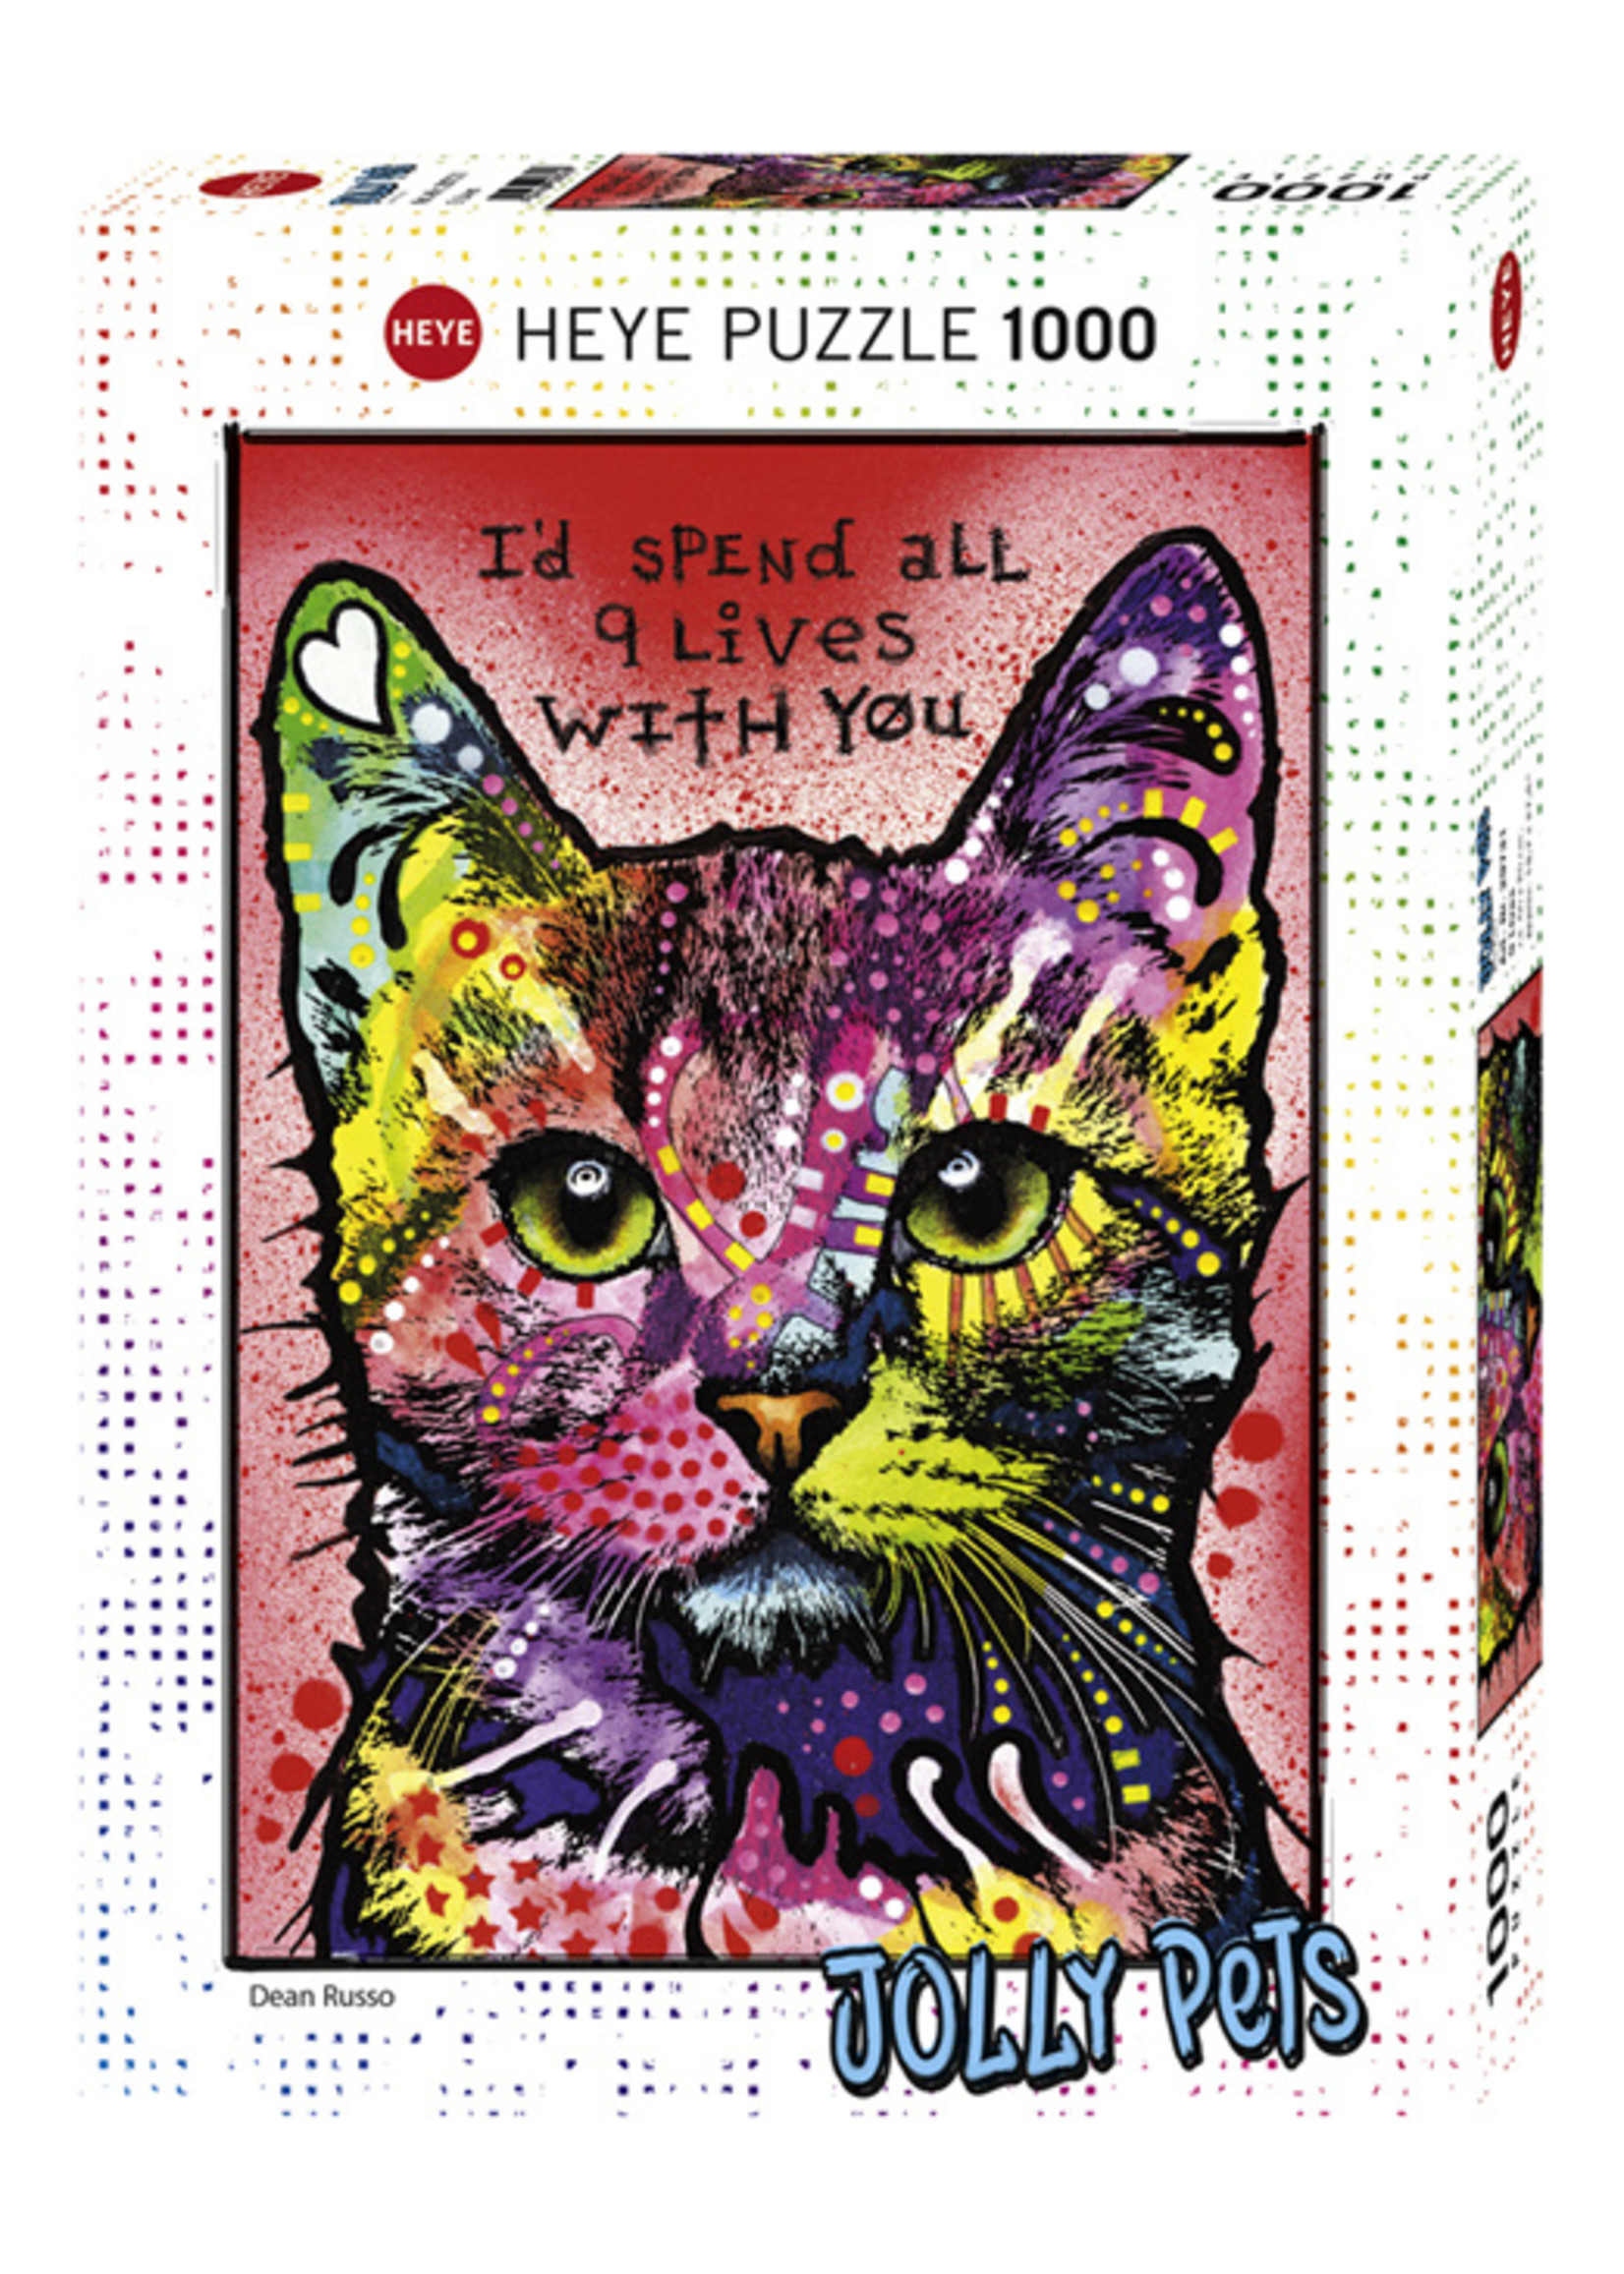 Heye 9 Lives - 1000 Piece Puzzle